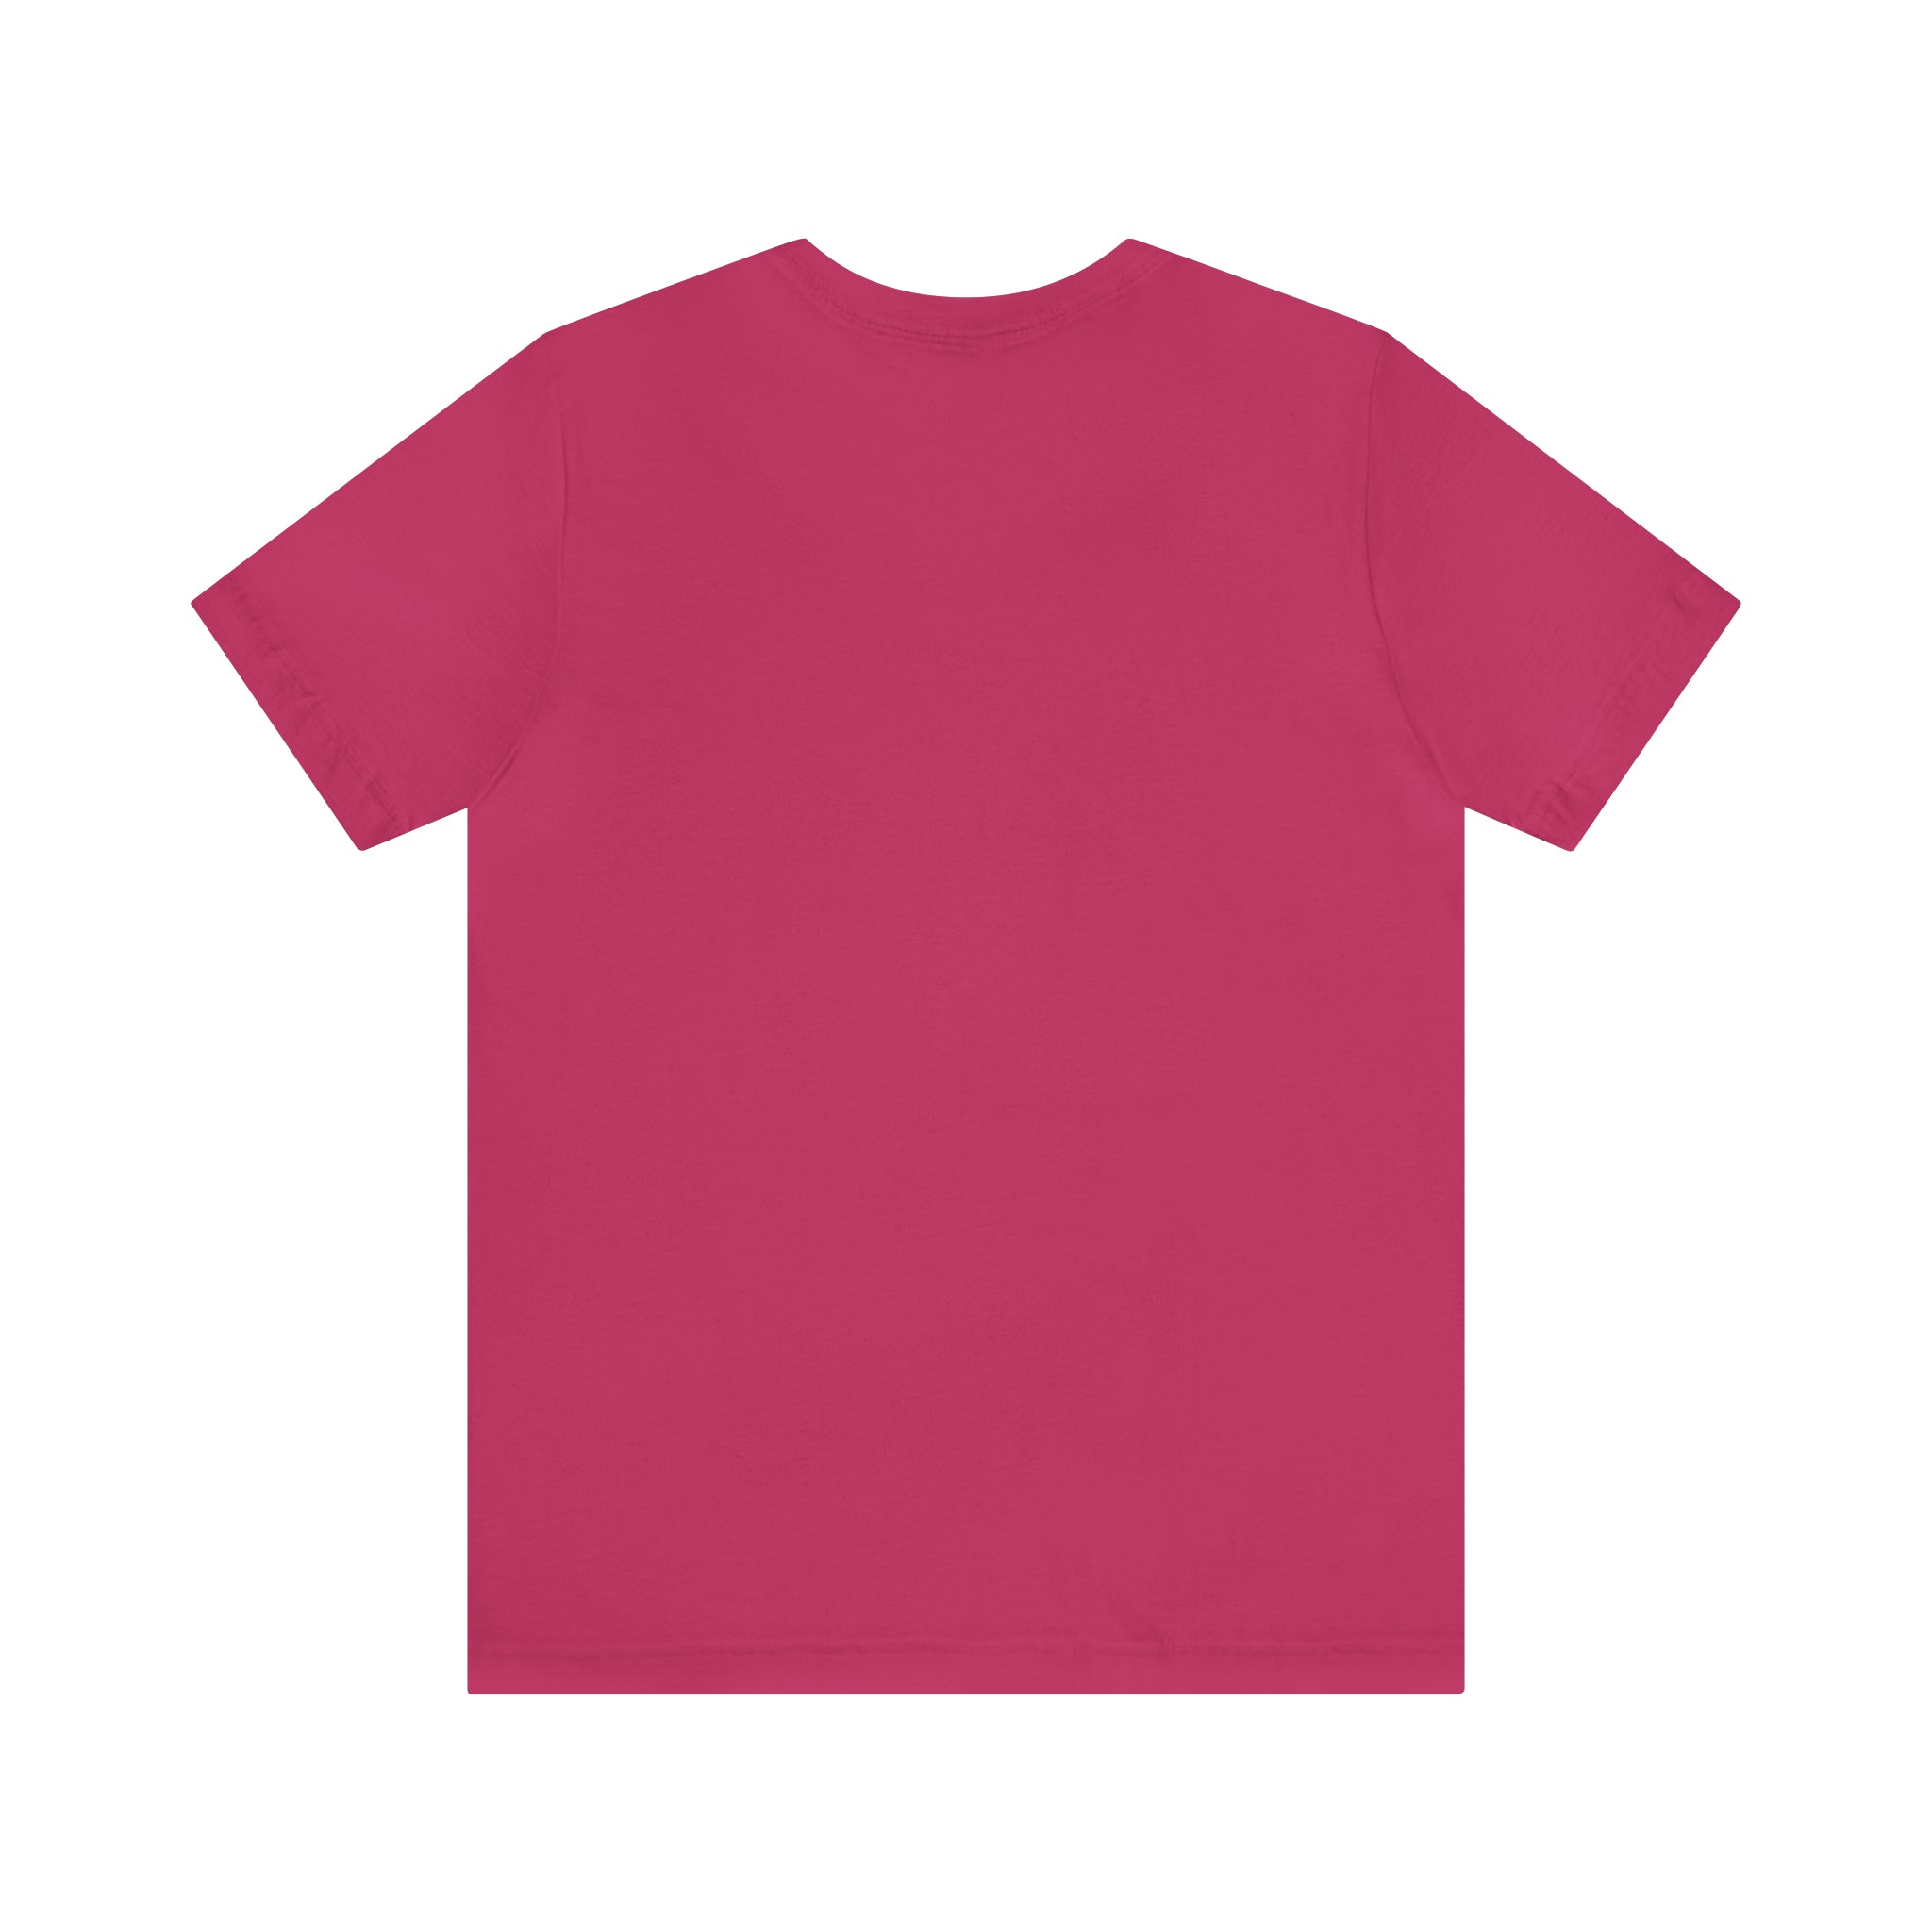 Printify T-Shirt TCB MAMA - Jersey Short Sleeve Tee